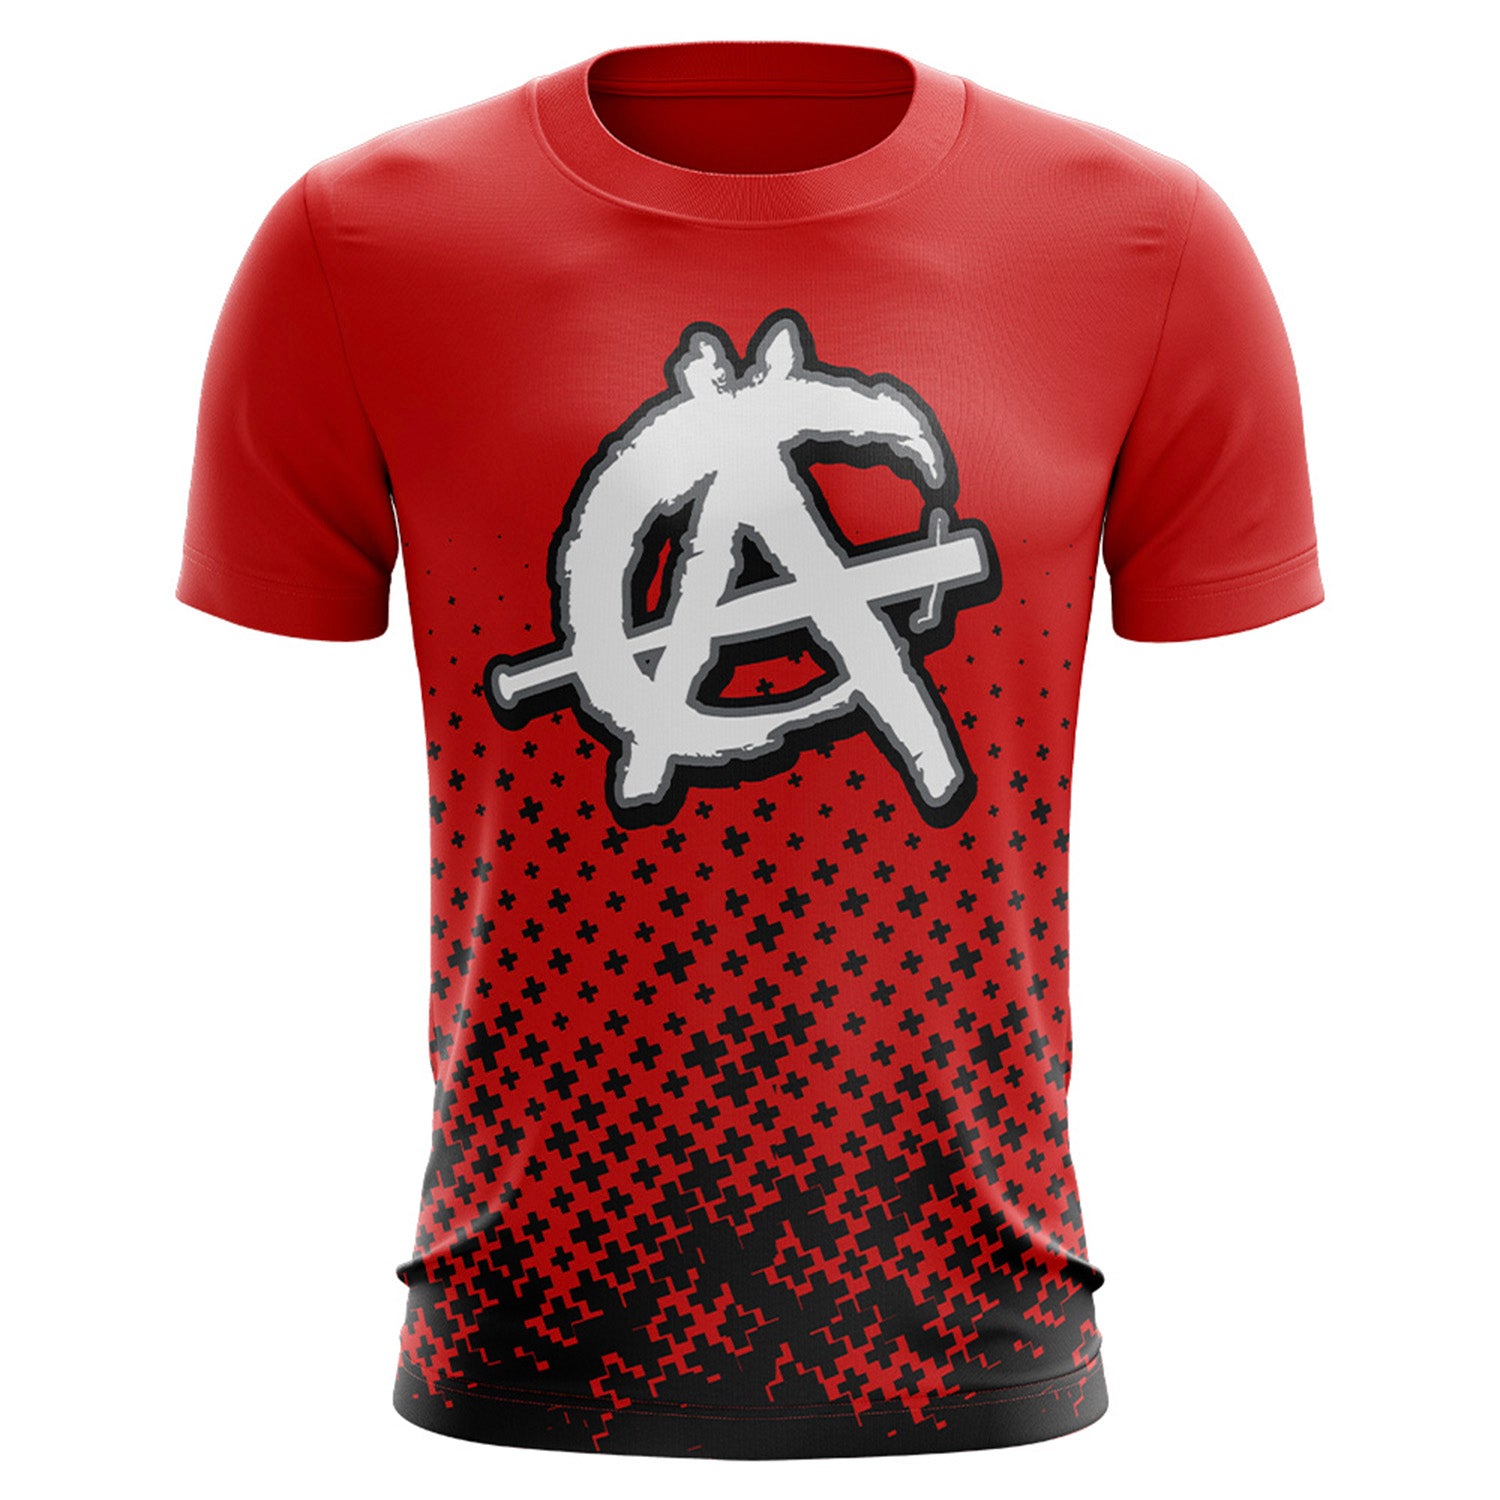 Anarchy Bat Company Short Sleeve Shirt - (Red/Black) - Smash It Sports